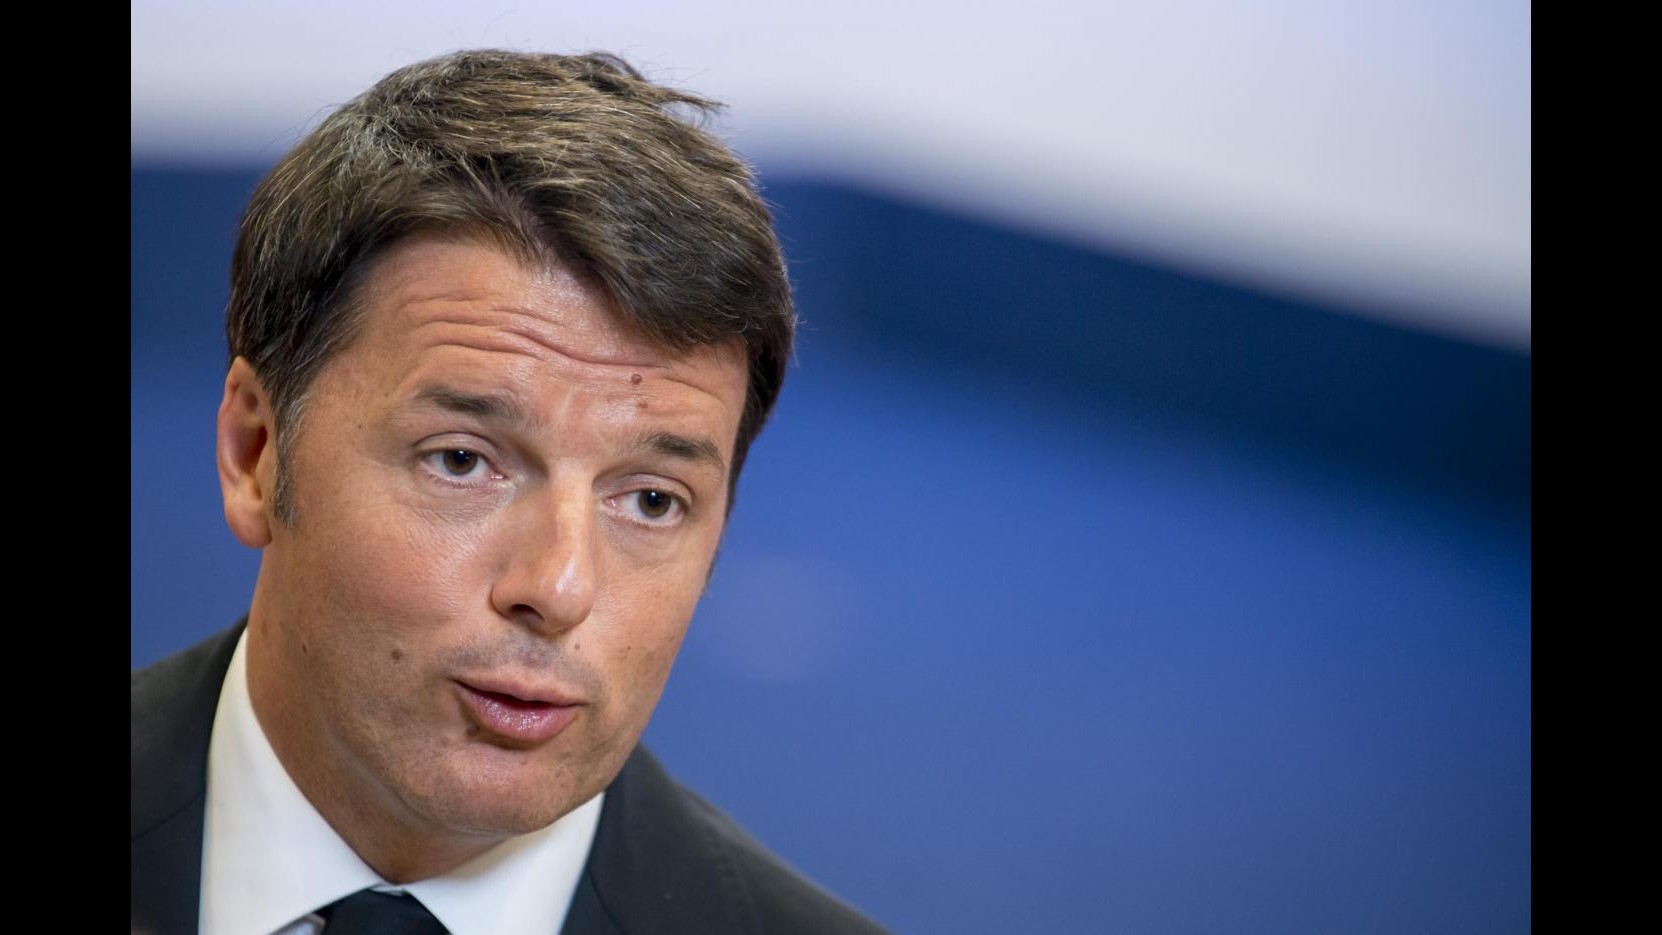 Onu, Renzi a New York per Assemblea generale: il suo programma